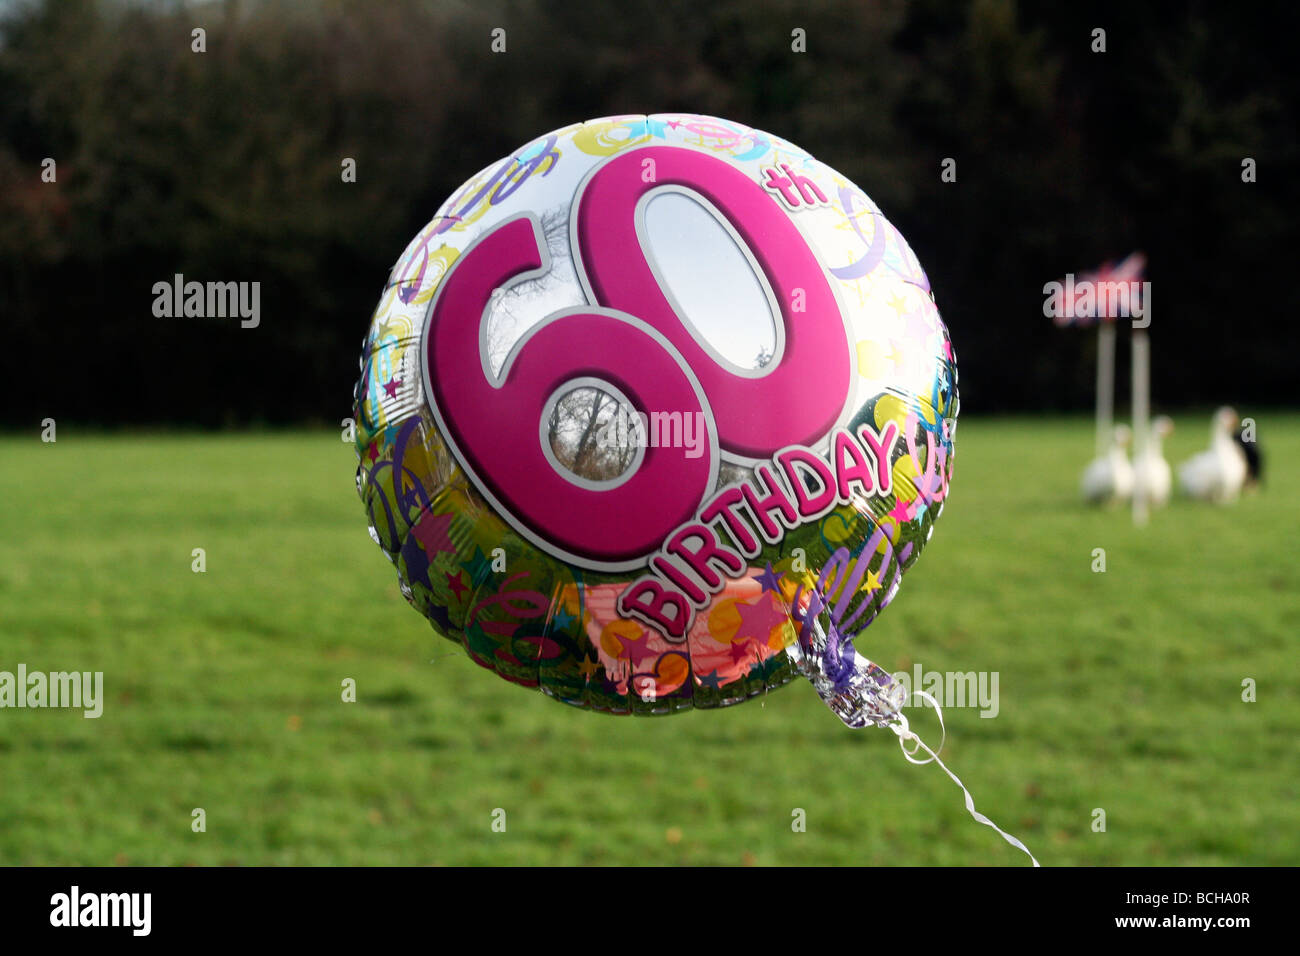 60th birthday balloon Stock Photo